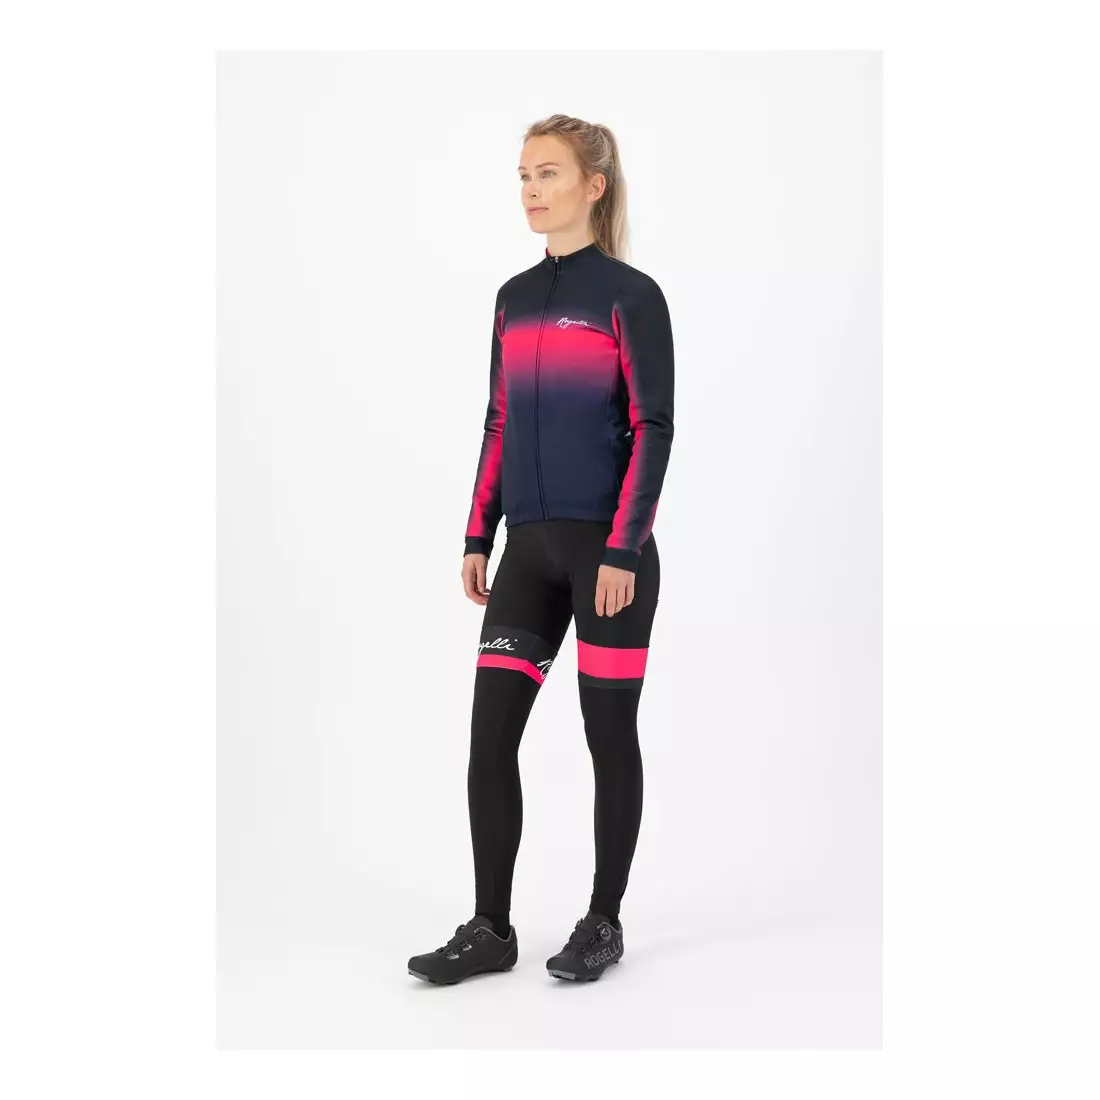 ROGELLI dámská zimní cyklistická bunda DREAM pink/navy blue ROG351093